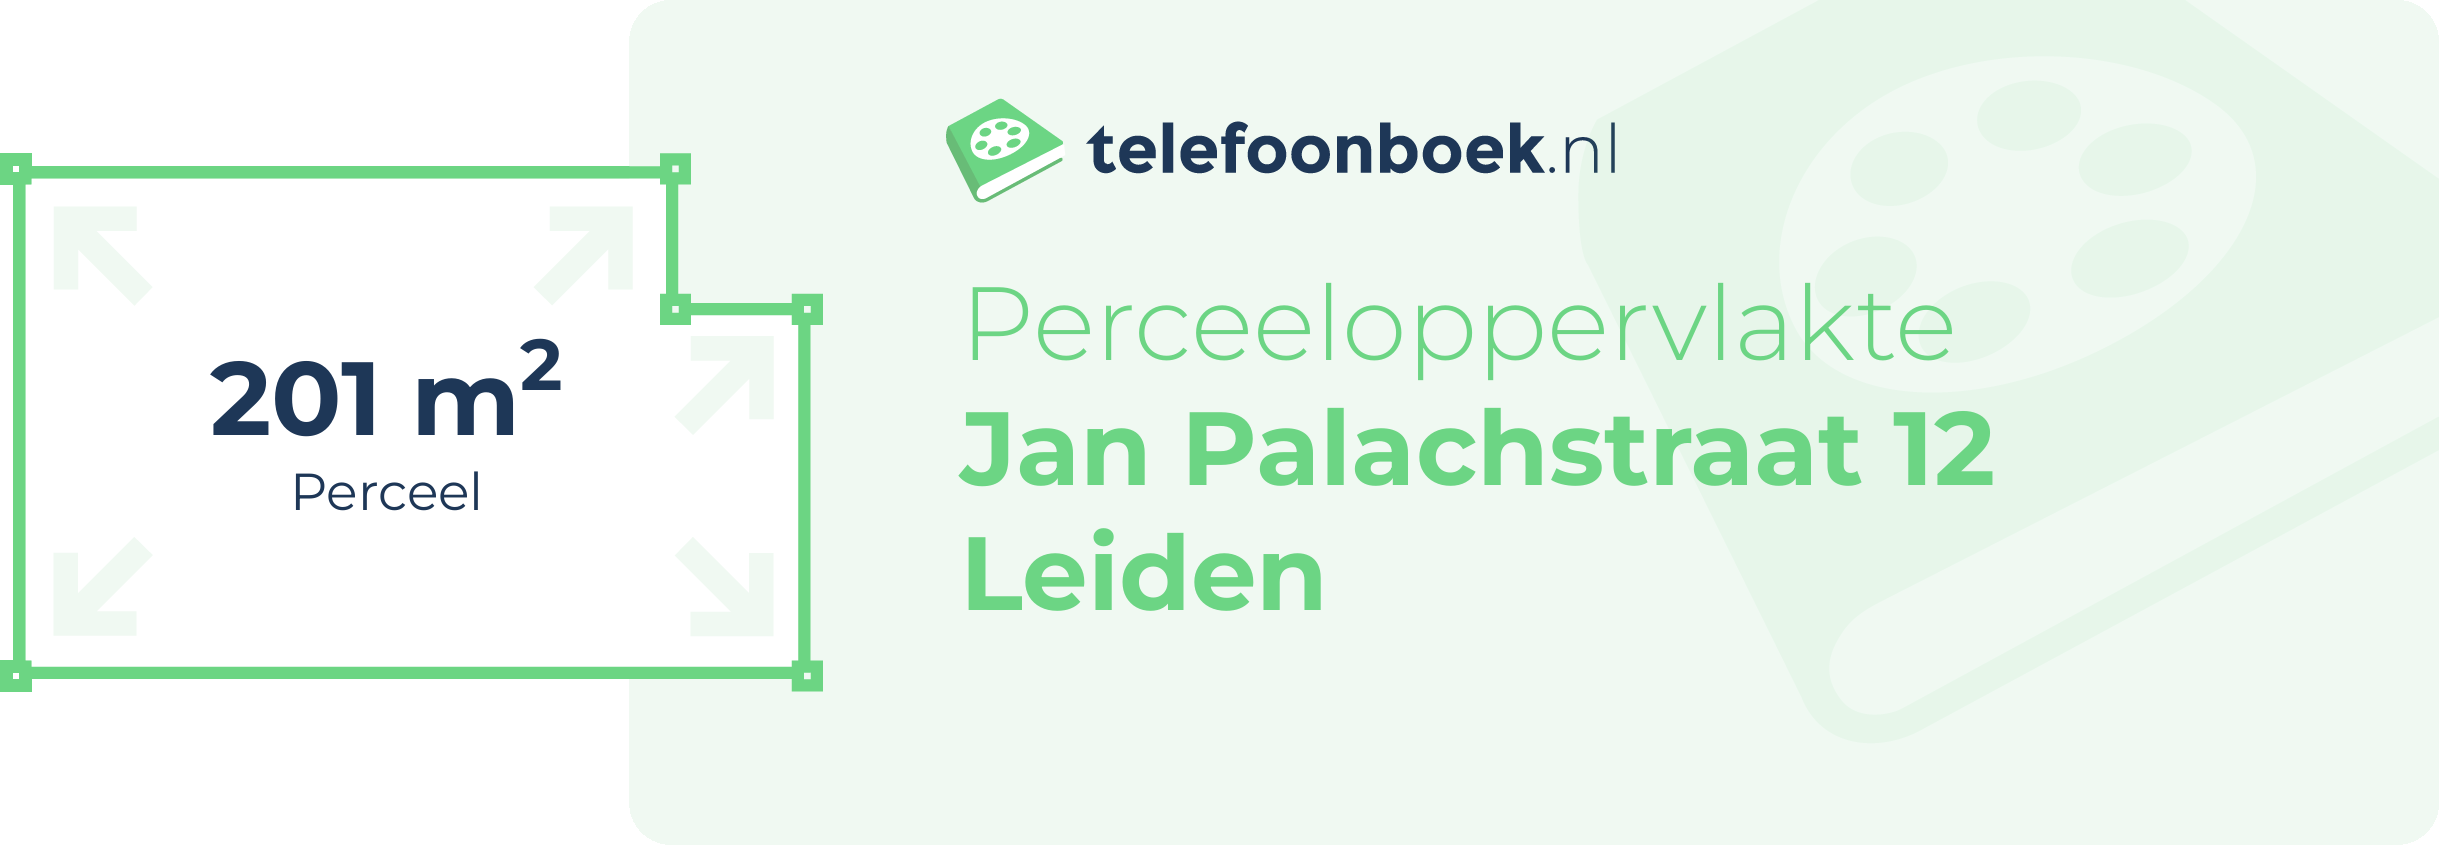 Perceeloppervlakte Jan Palachstraat 12 Leiden